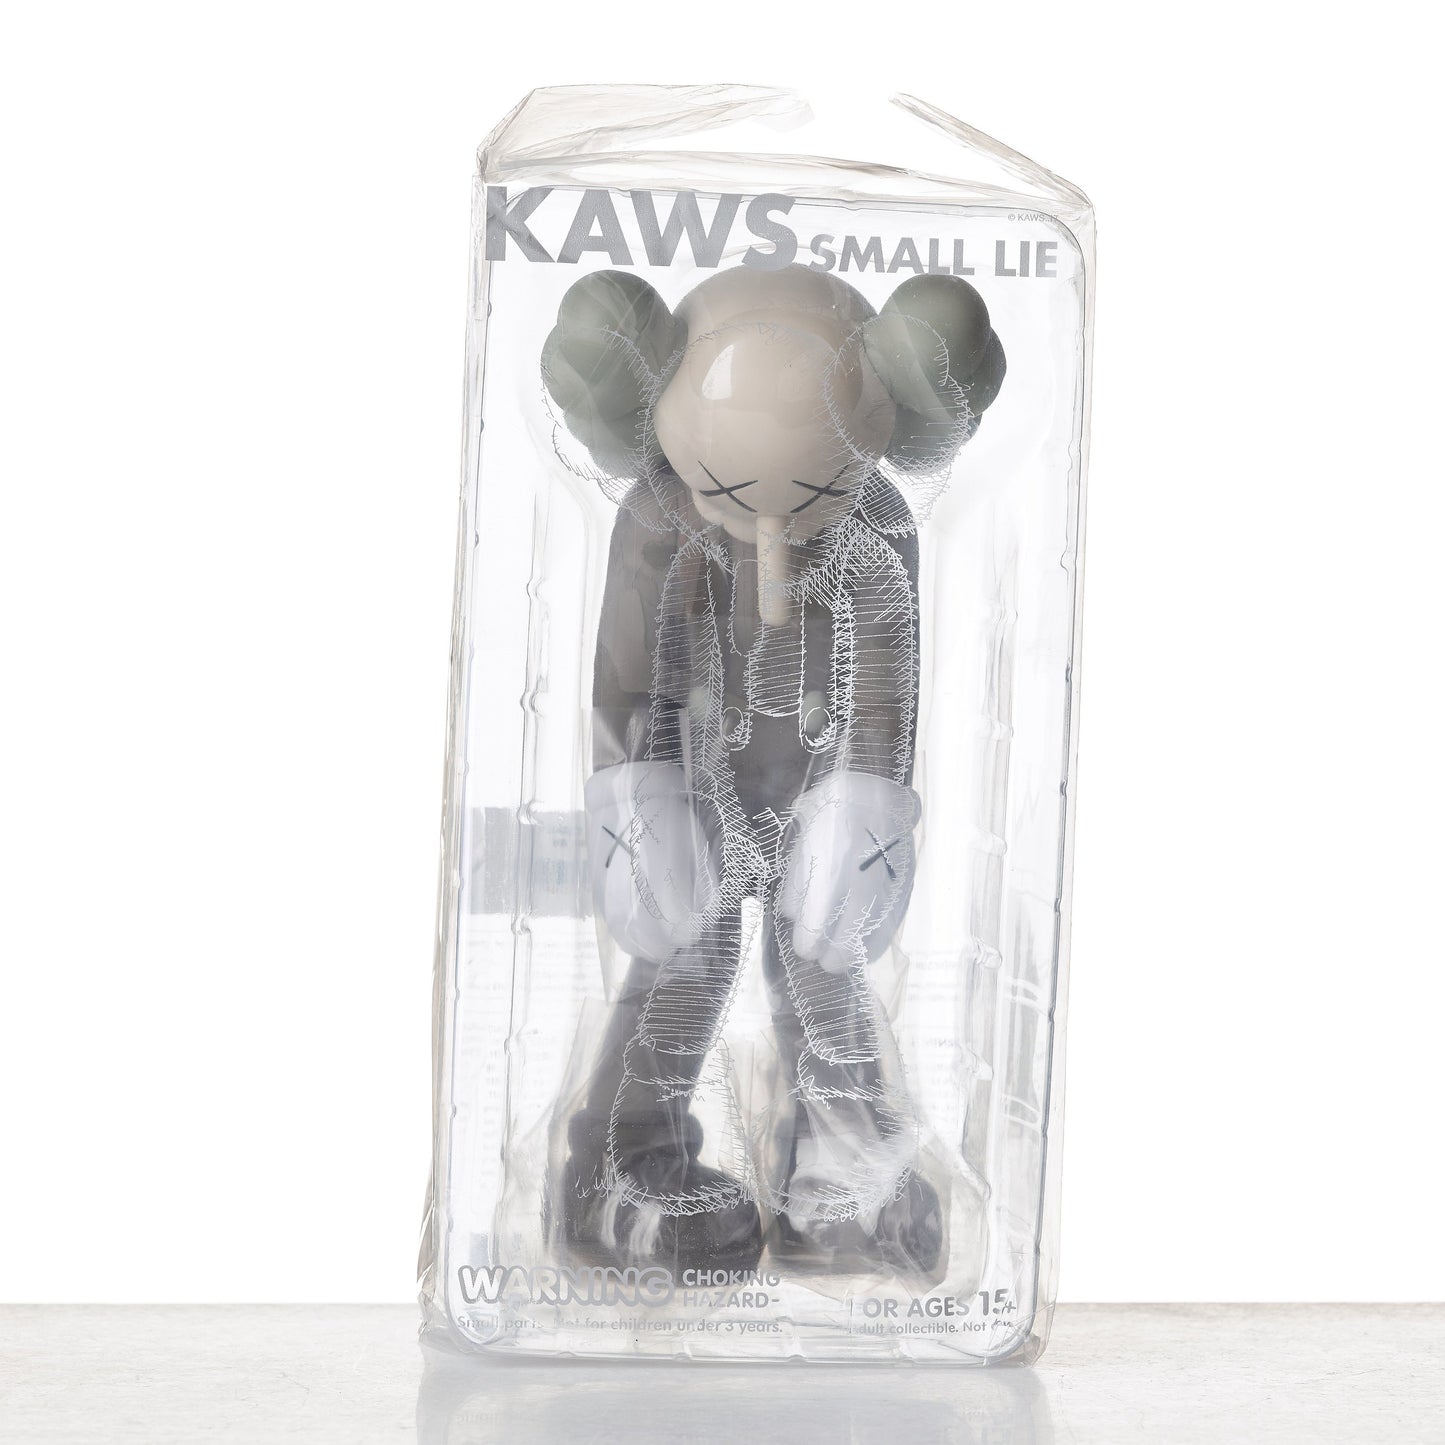 KAWS, Small Lie Companion Vinyl Figure Grey, 2017